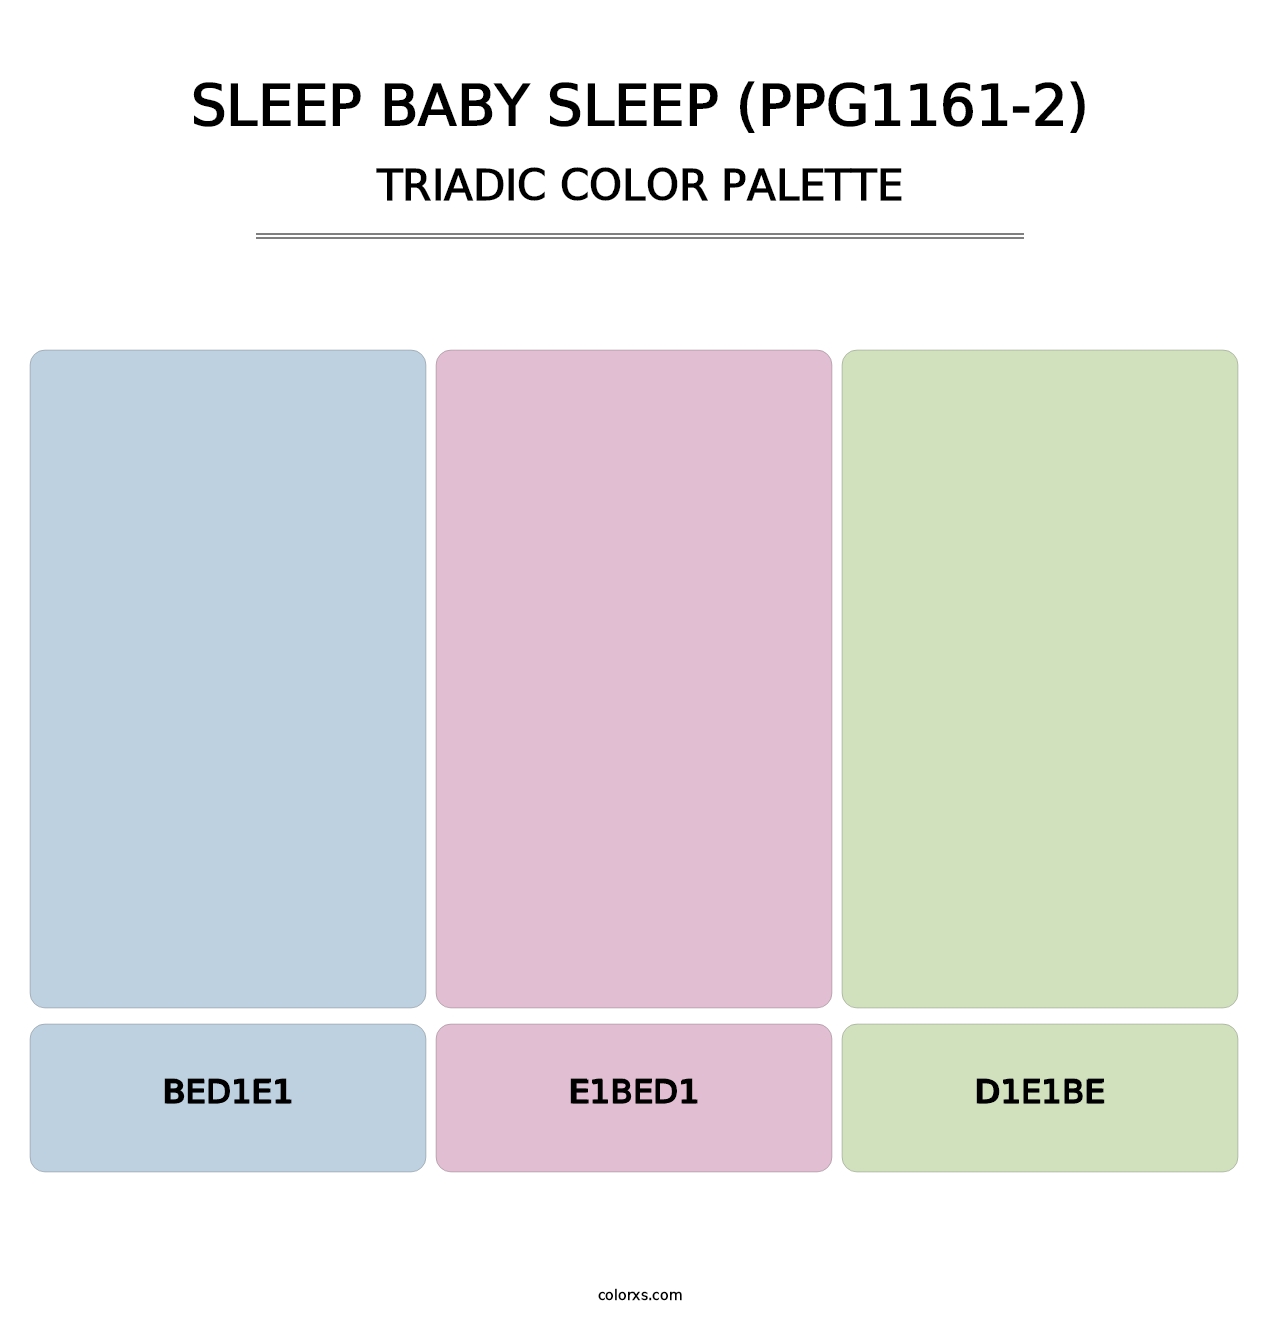 Sleep Baby Sleep (PPG1161-2) - Triadic Color Palette